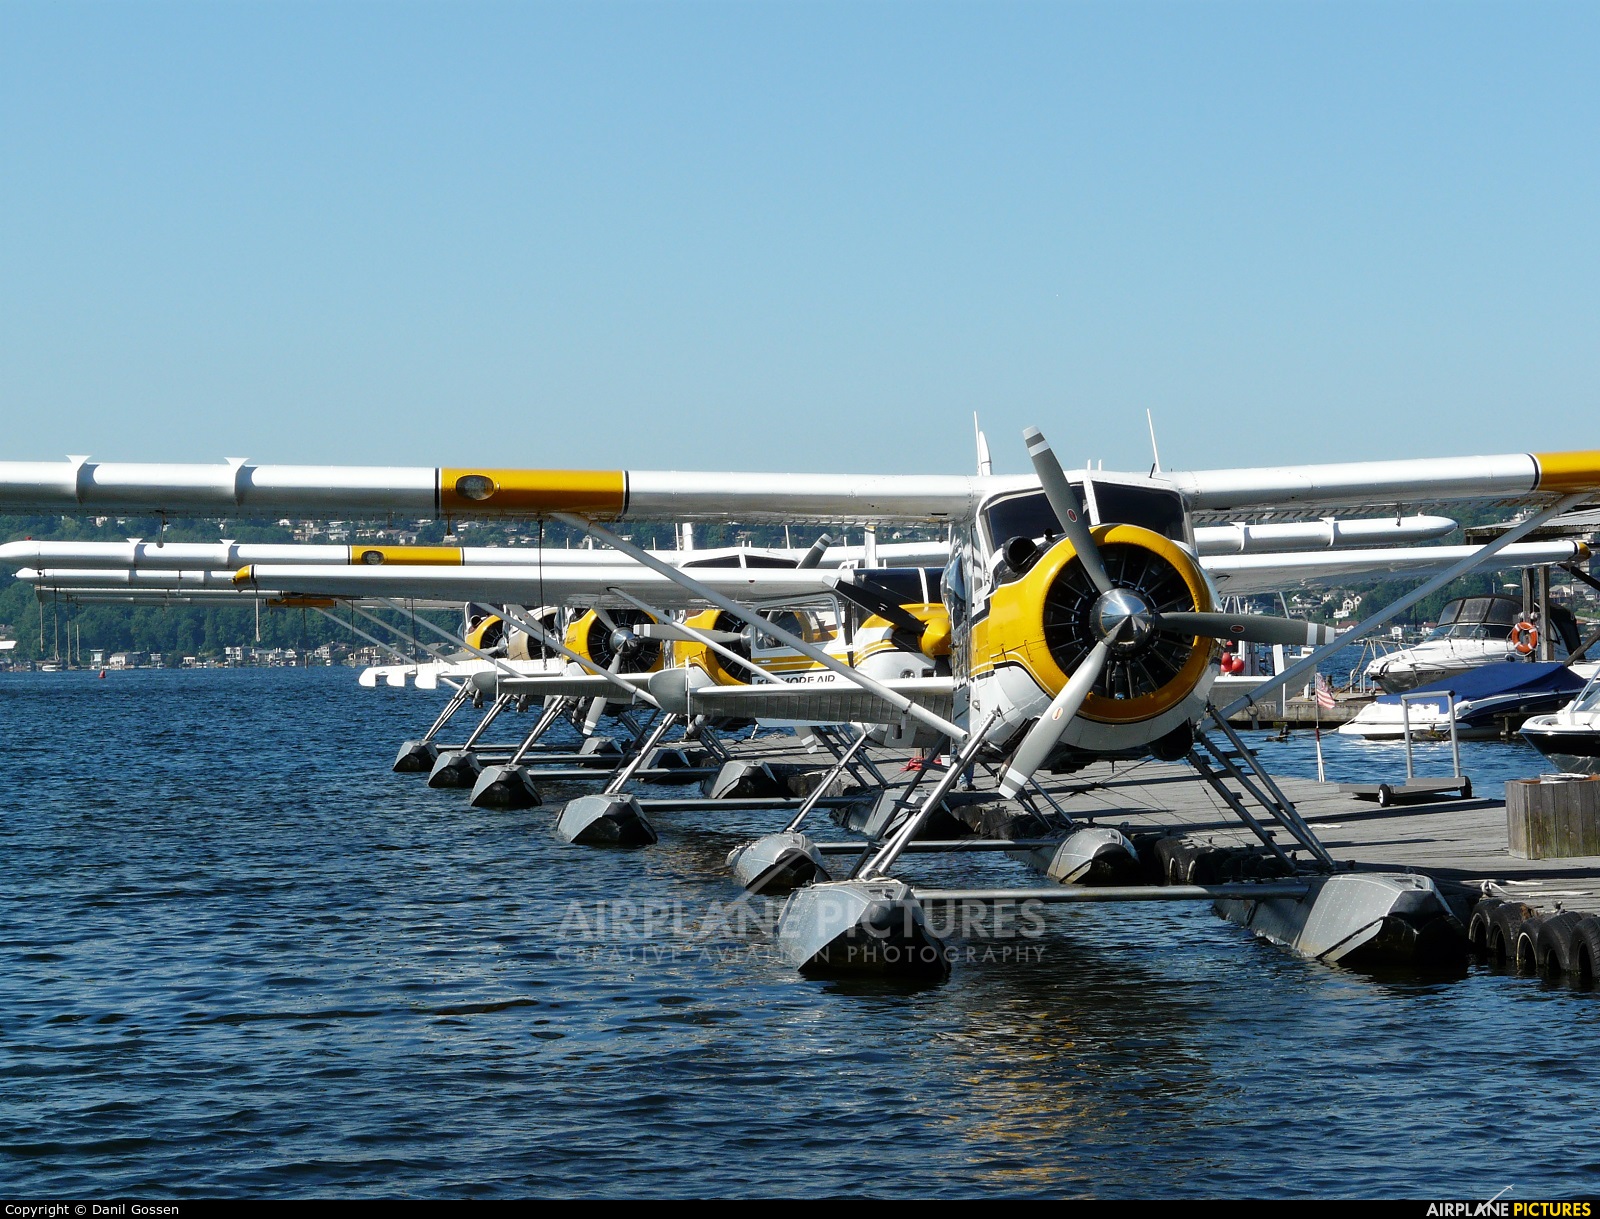 Kenmore Air - aircraft at Seattle - Kenmore Air Harbor (Lake Union) Seaplane